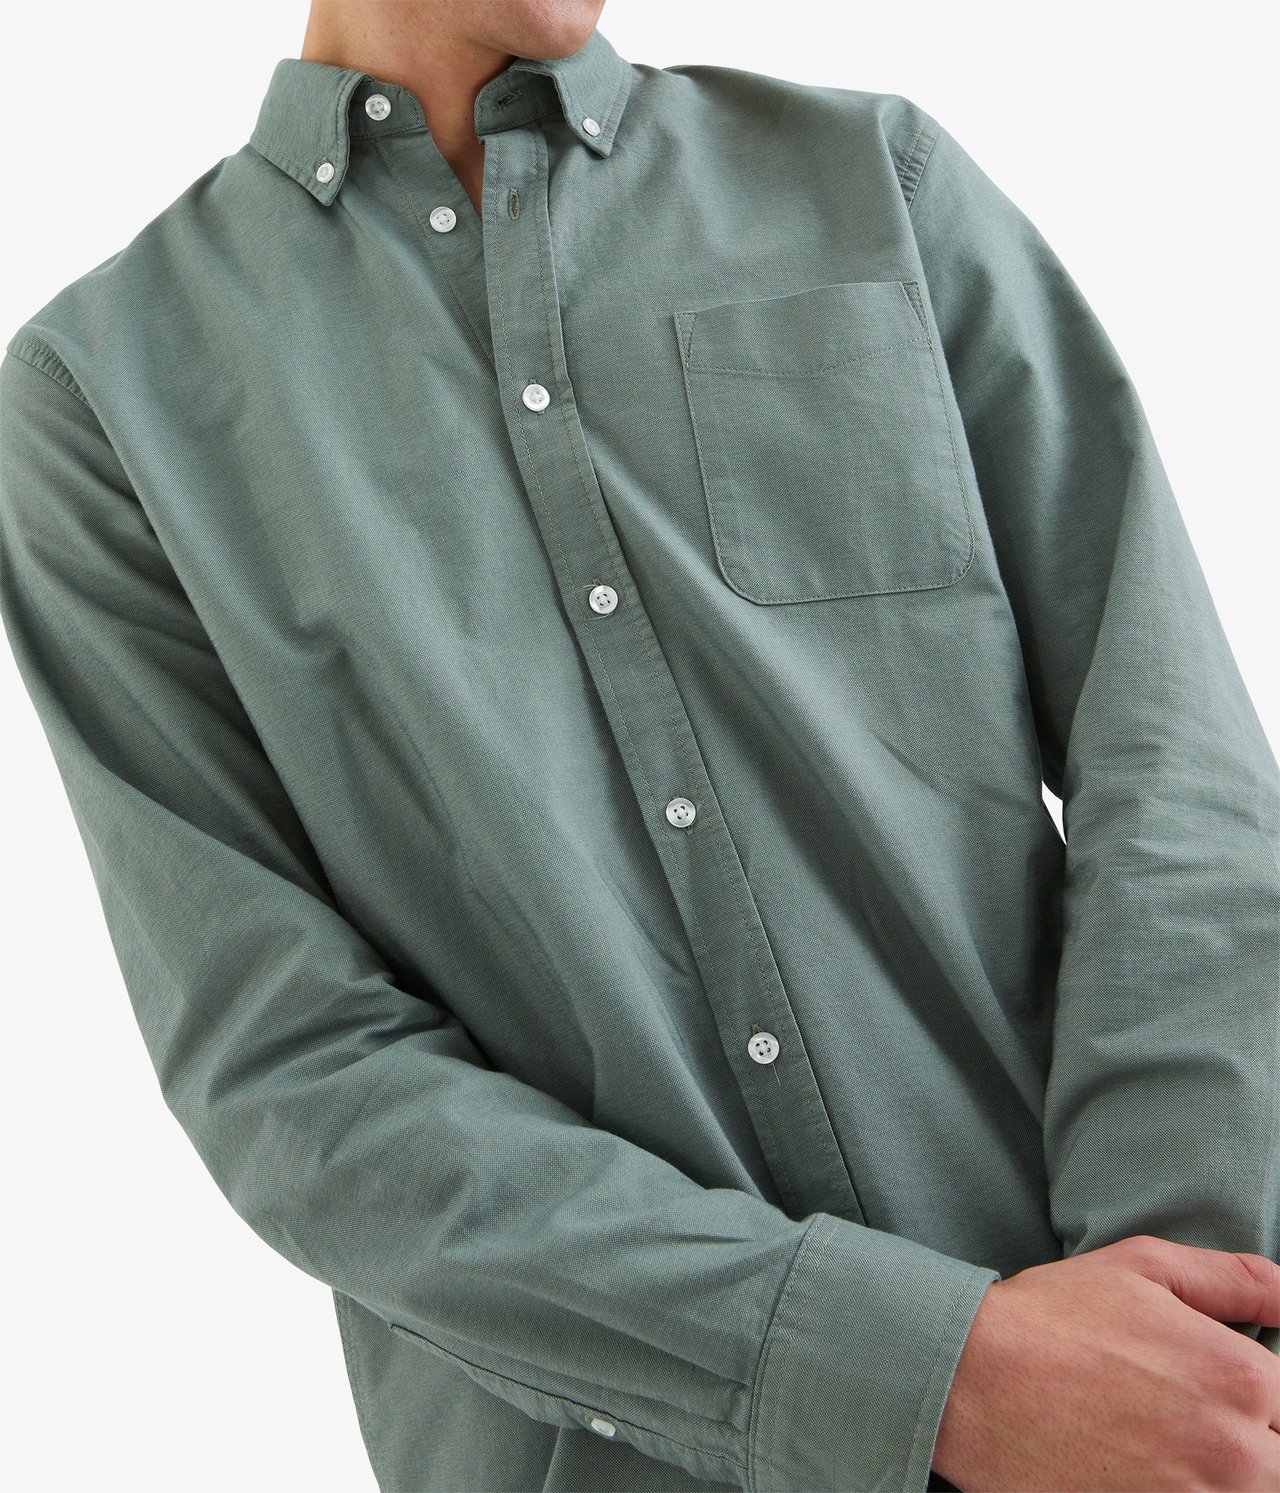 Oxfordskjorte regular fit - Grønn - 189cm / Storlek: M - 3